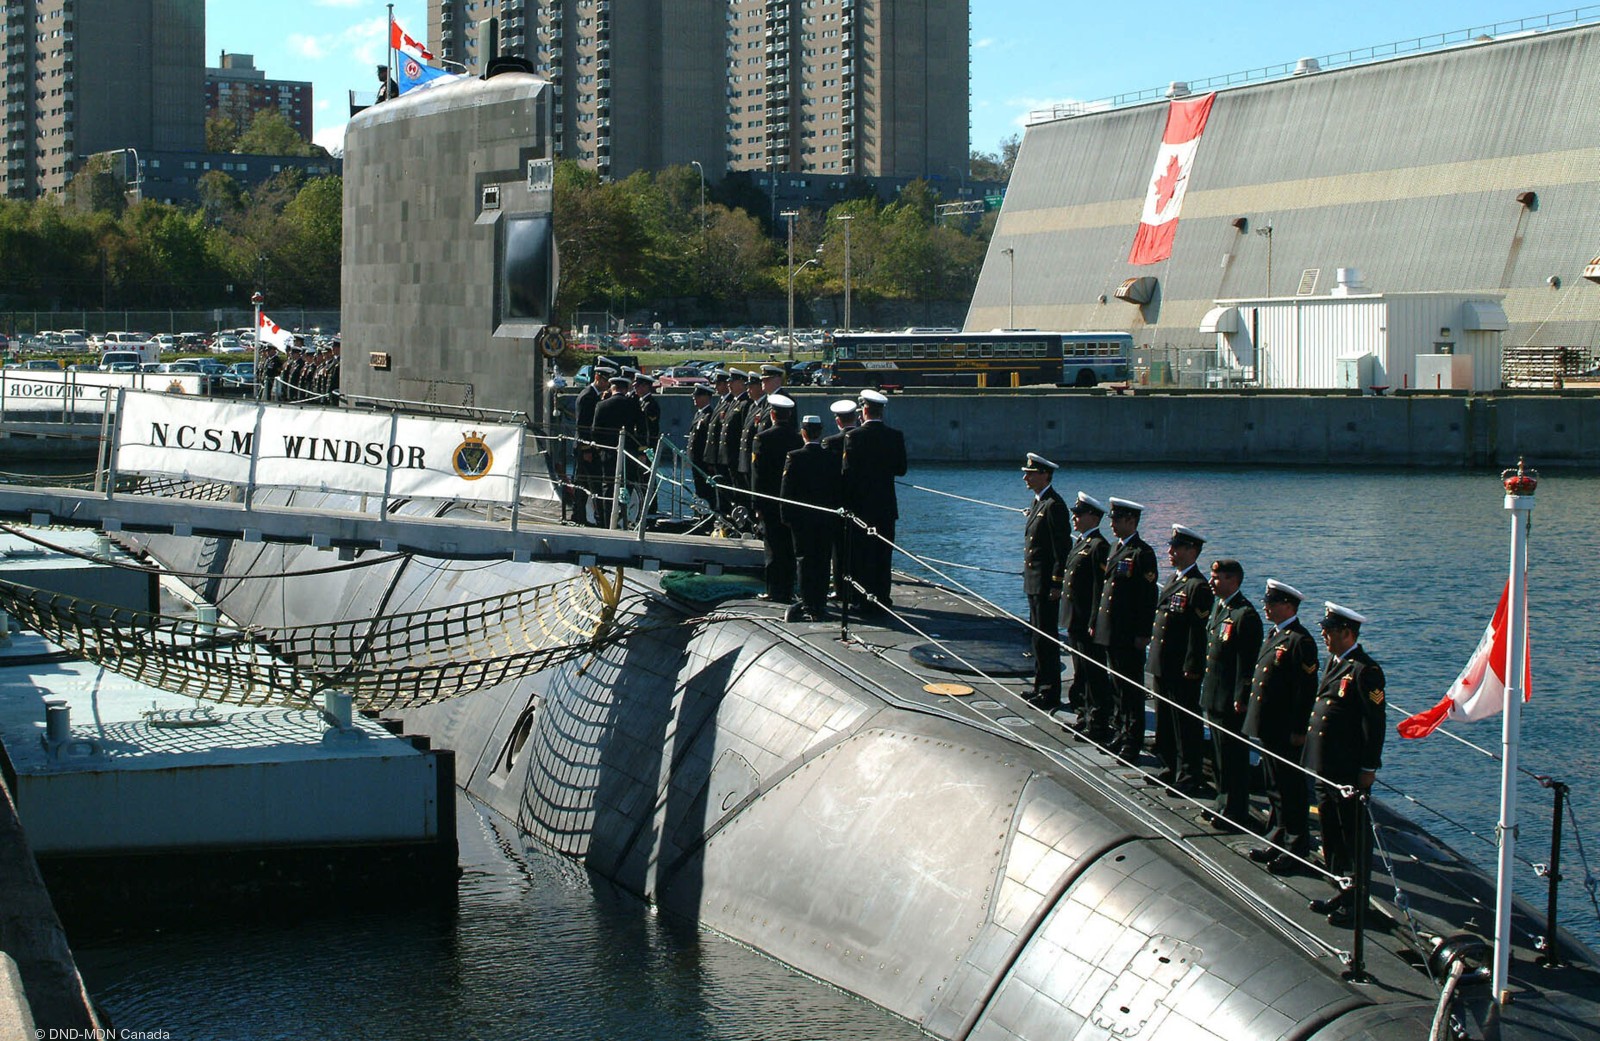 ssk-877 hmcs windsor victoria upholder class attack submarine hunter killer ncsm royal canadian navy 21